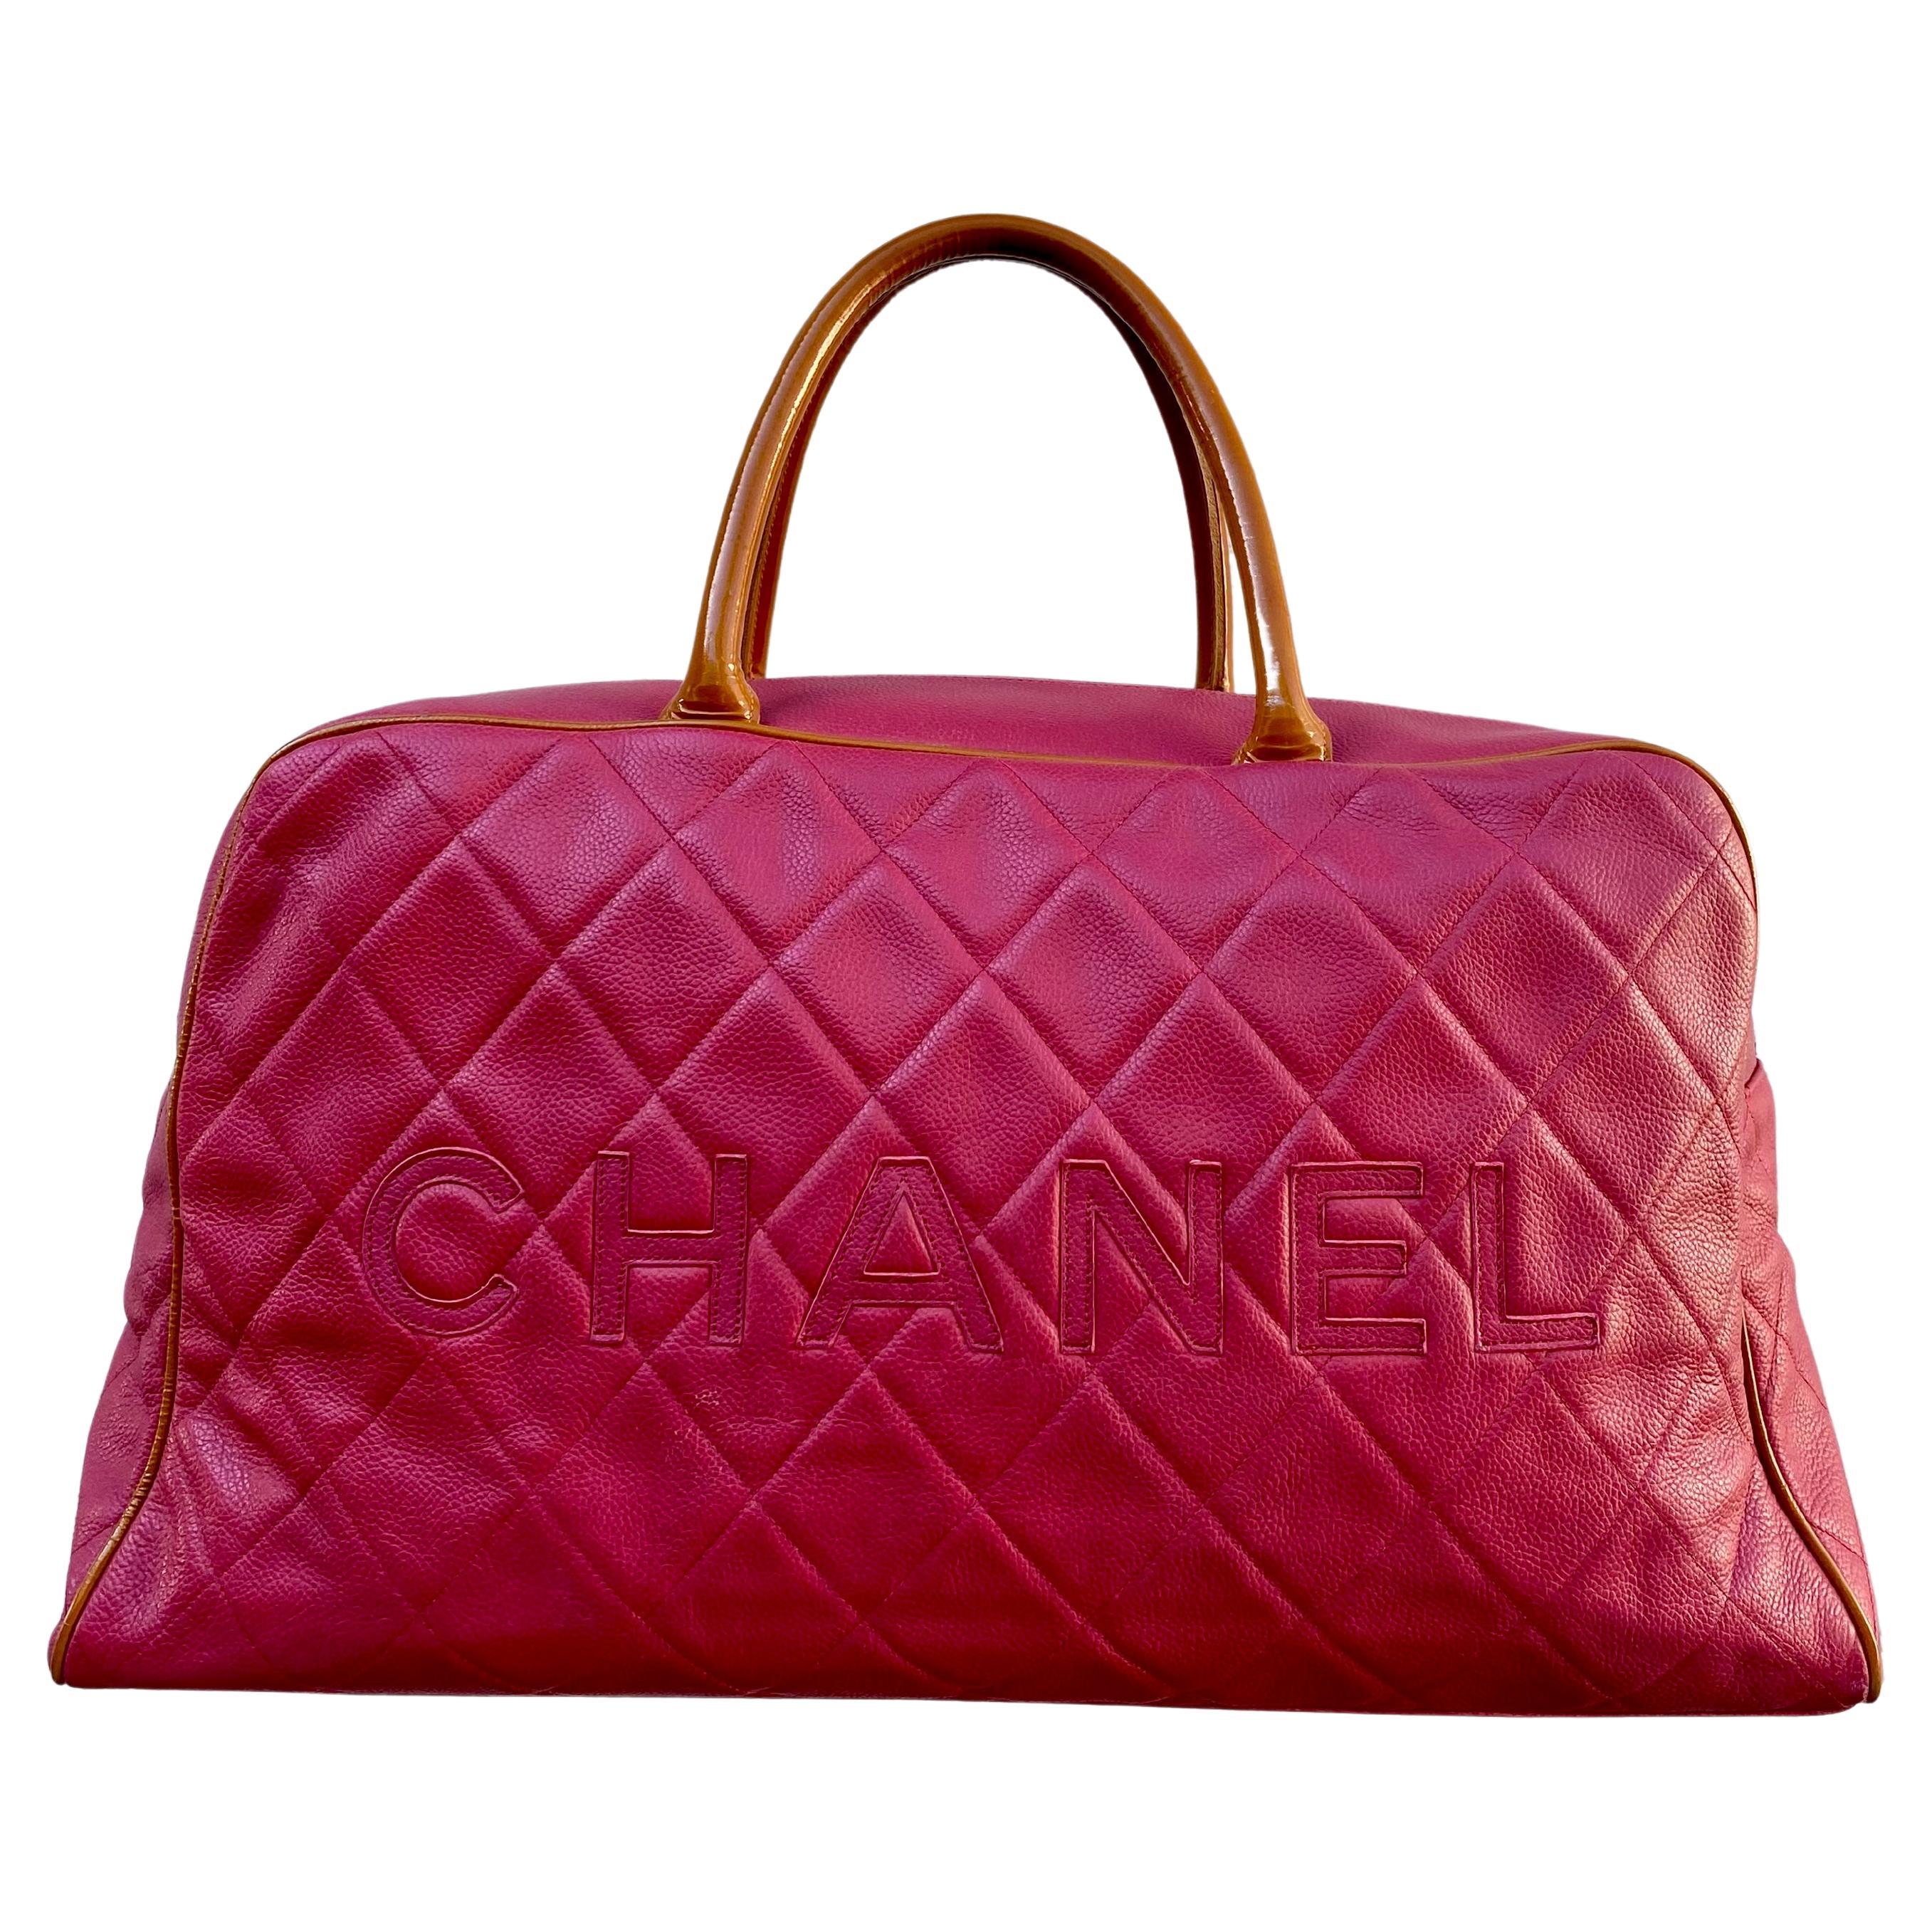 Chanel Rare Vintage Raspberry Pink Caviar Weekender Travel Duffle Shopper Bag For Sale